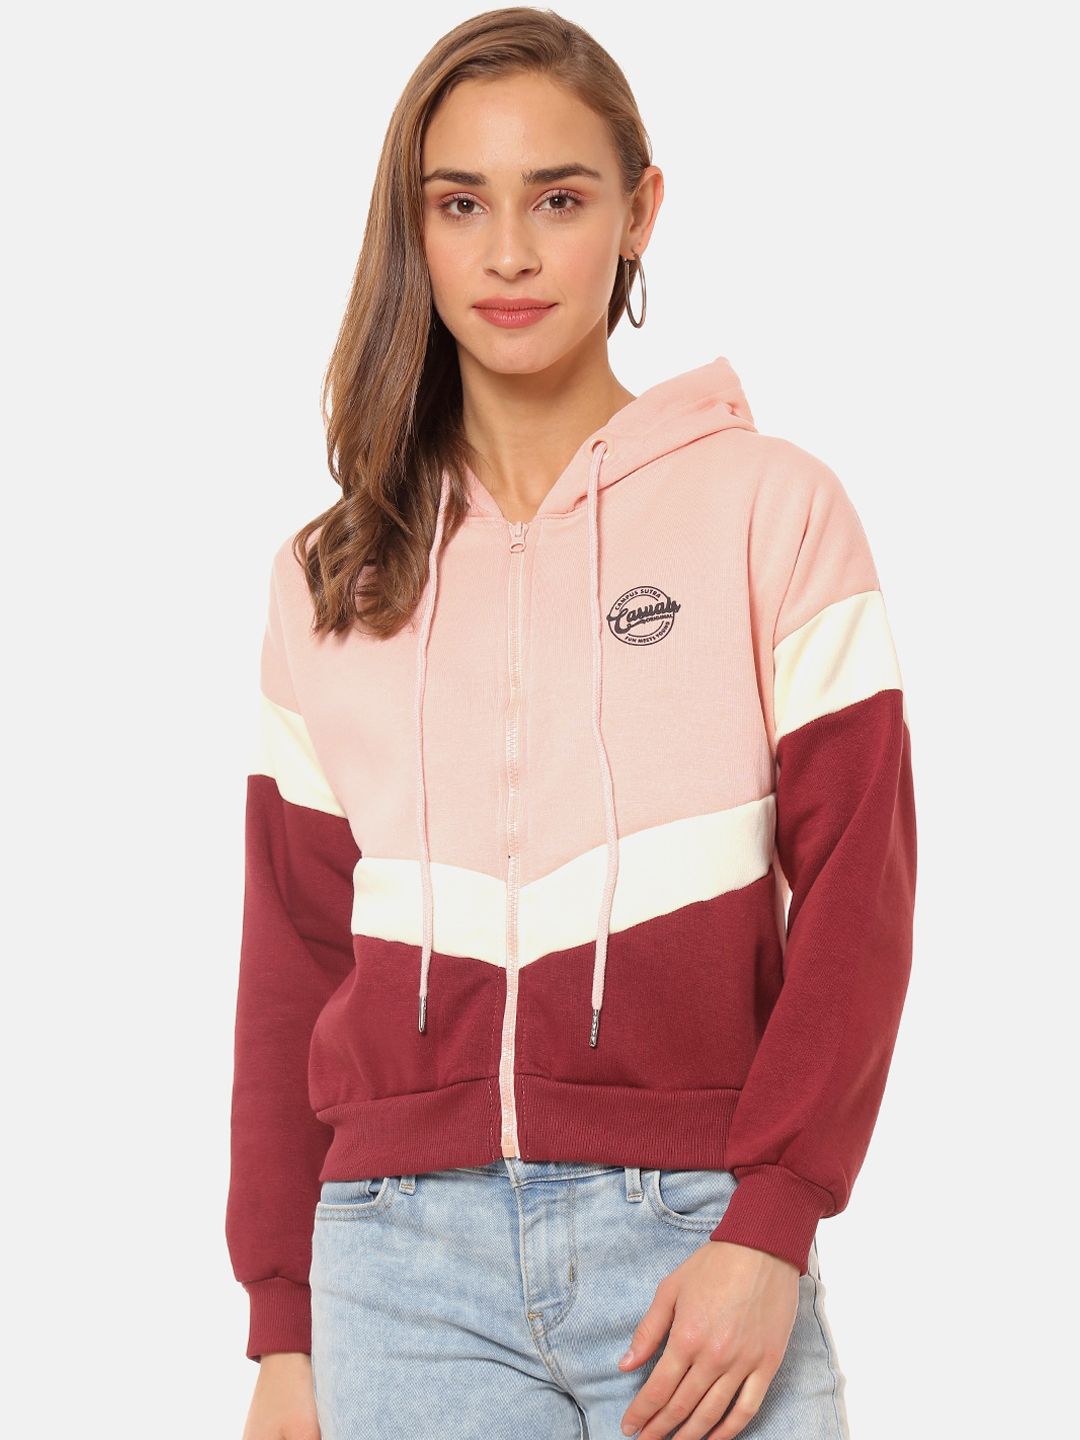 Campus Sutra Women Pink & Maroon Colourblocked Hooded Sweatshirt Price in India